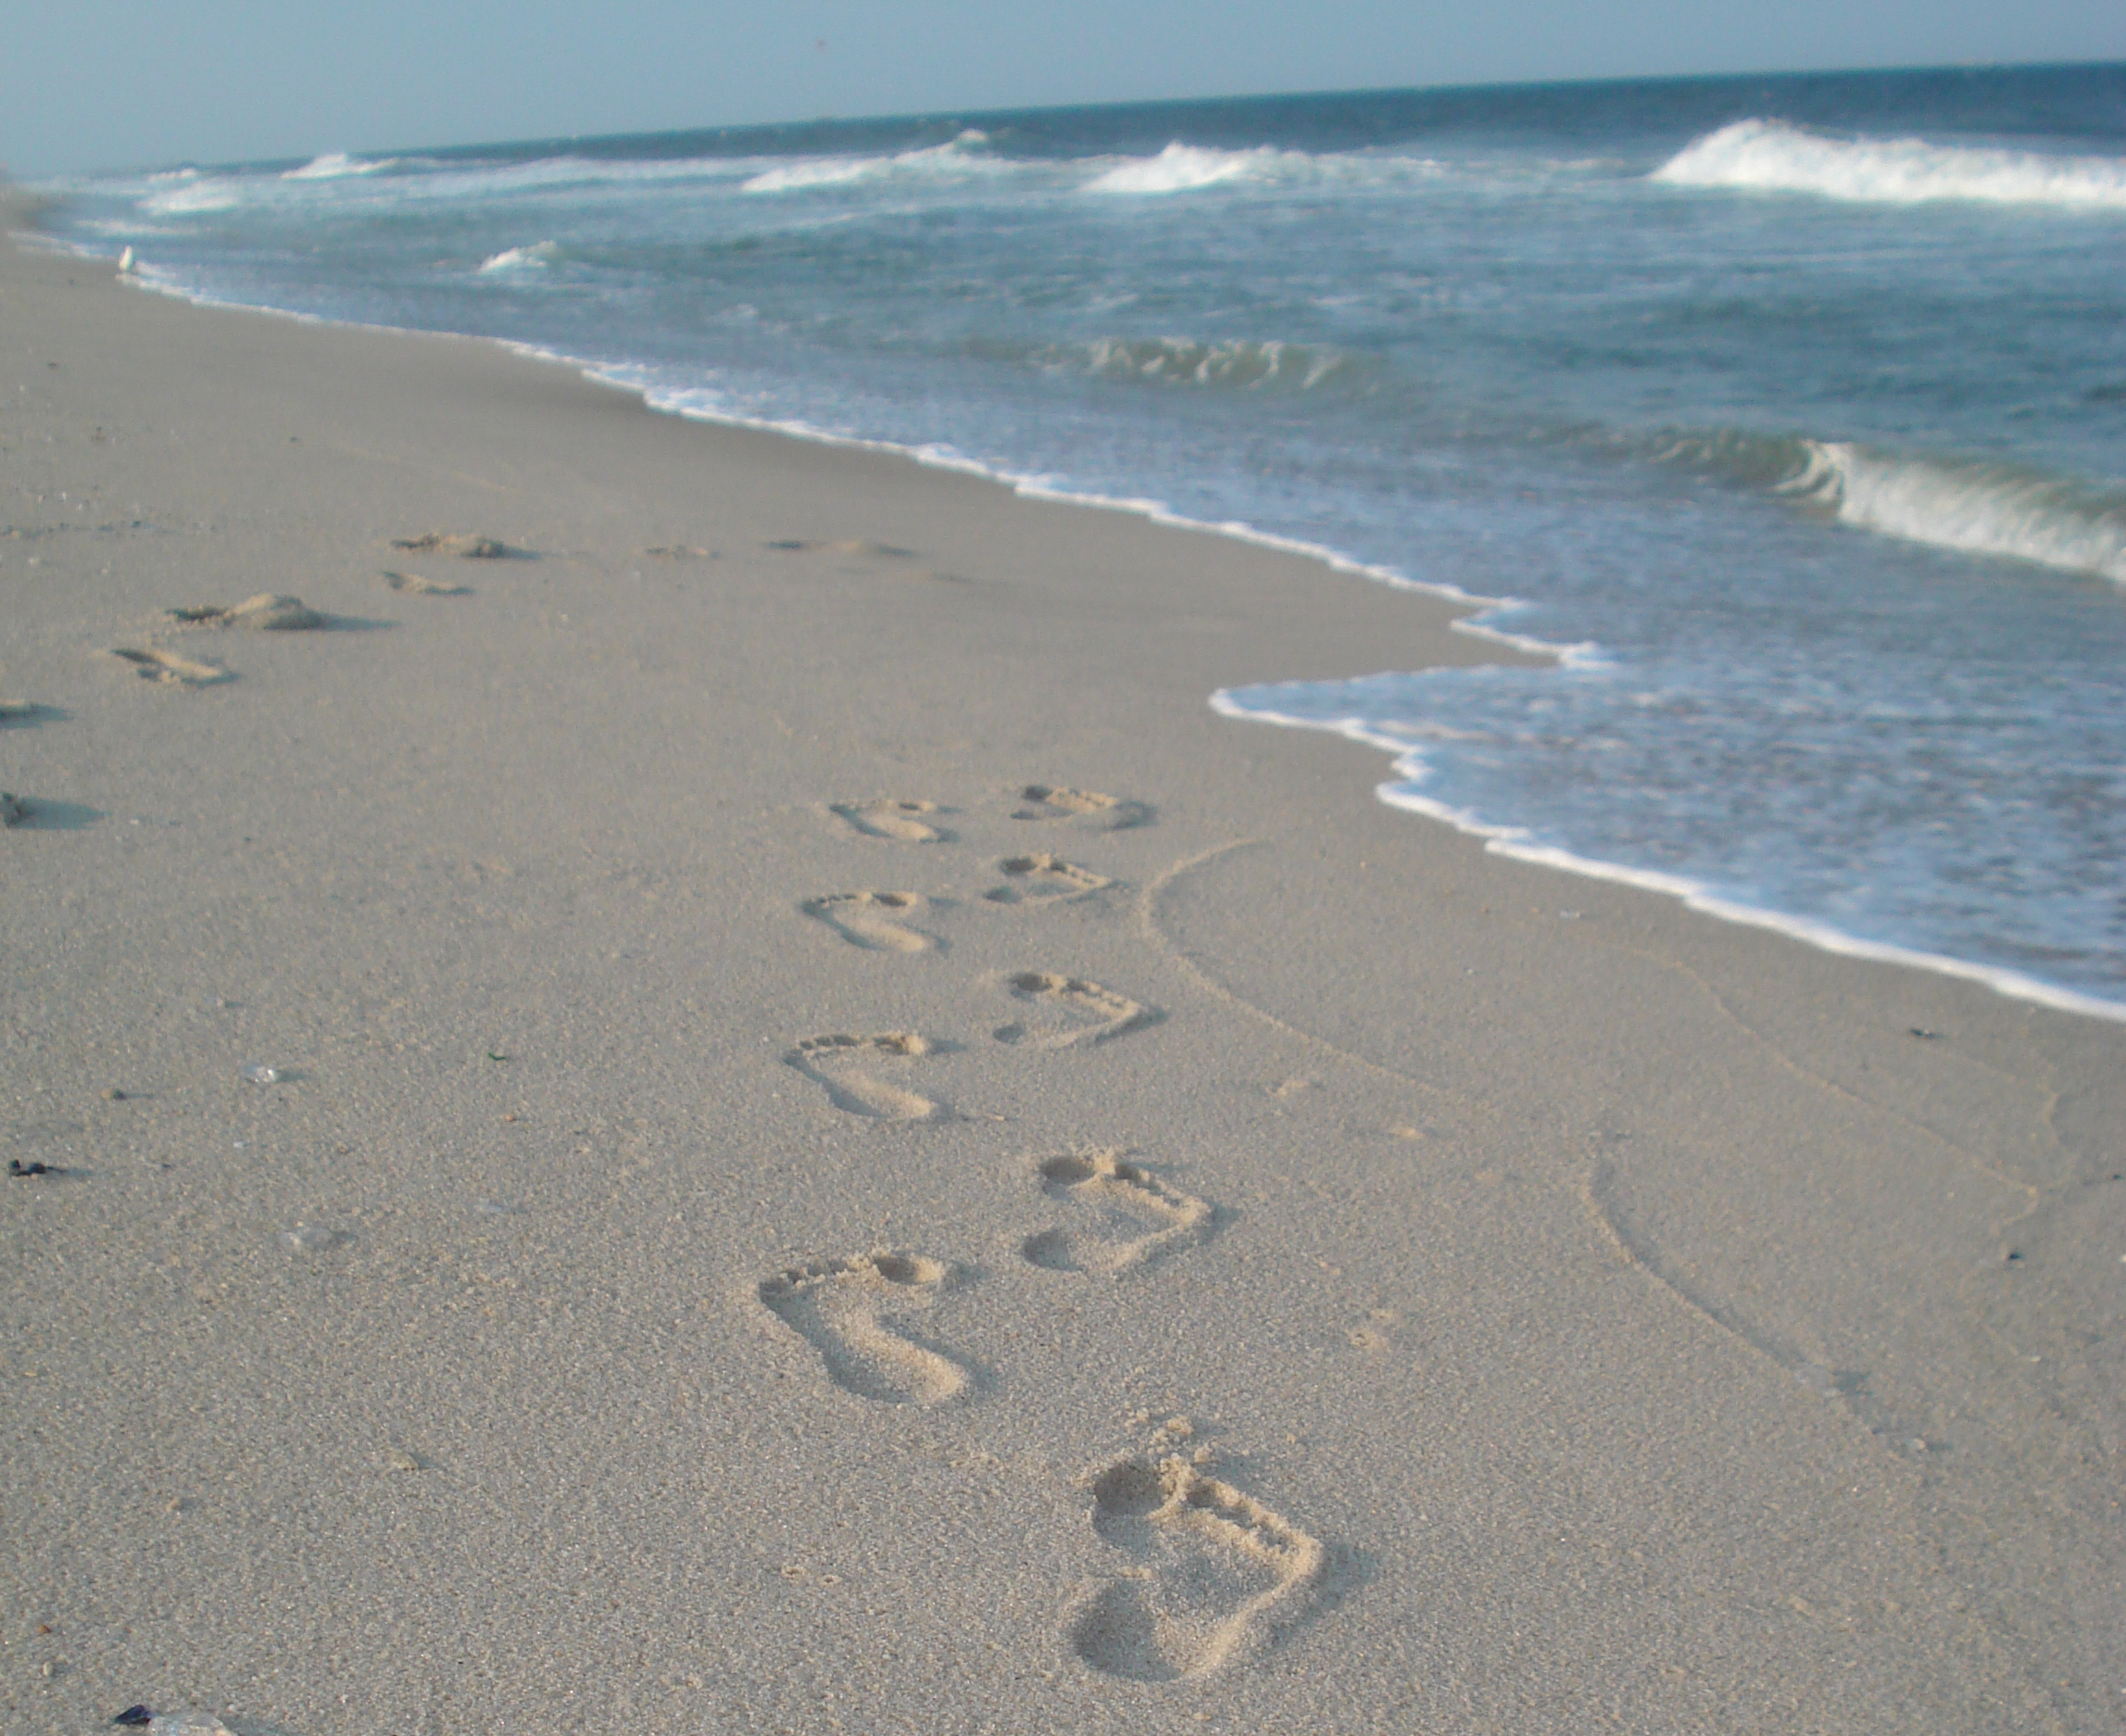 Barefoot on Sand